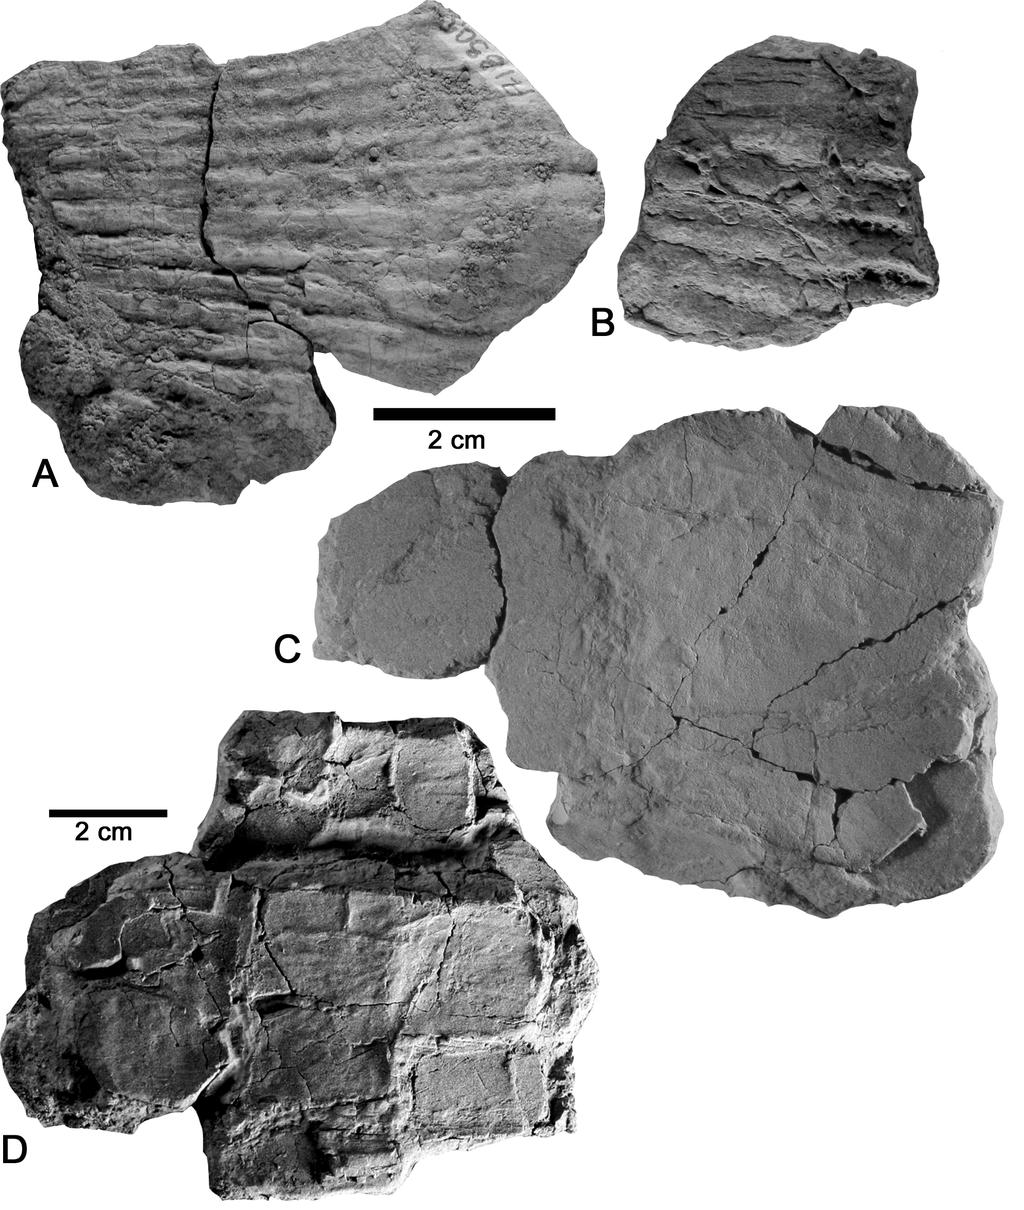 54 FIGURE 3. A, C-D, Tecovasuchus chatterjeei and B, Tecovasuchus sp.